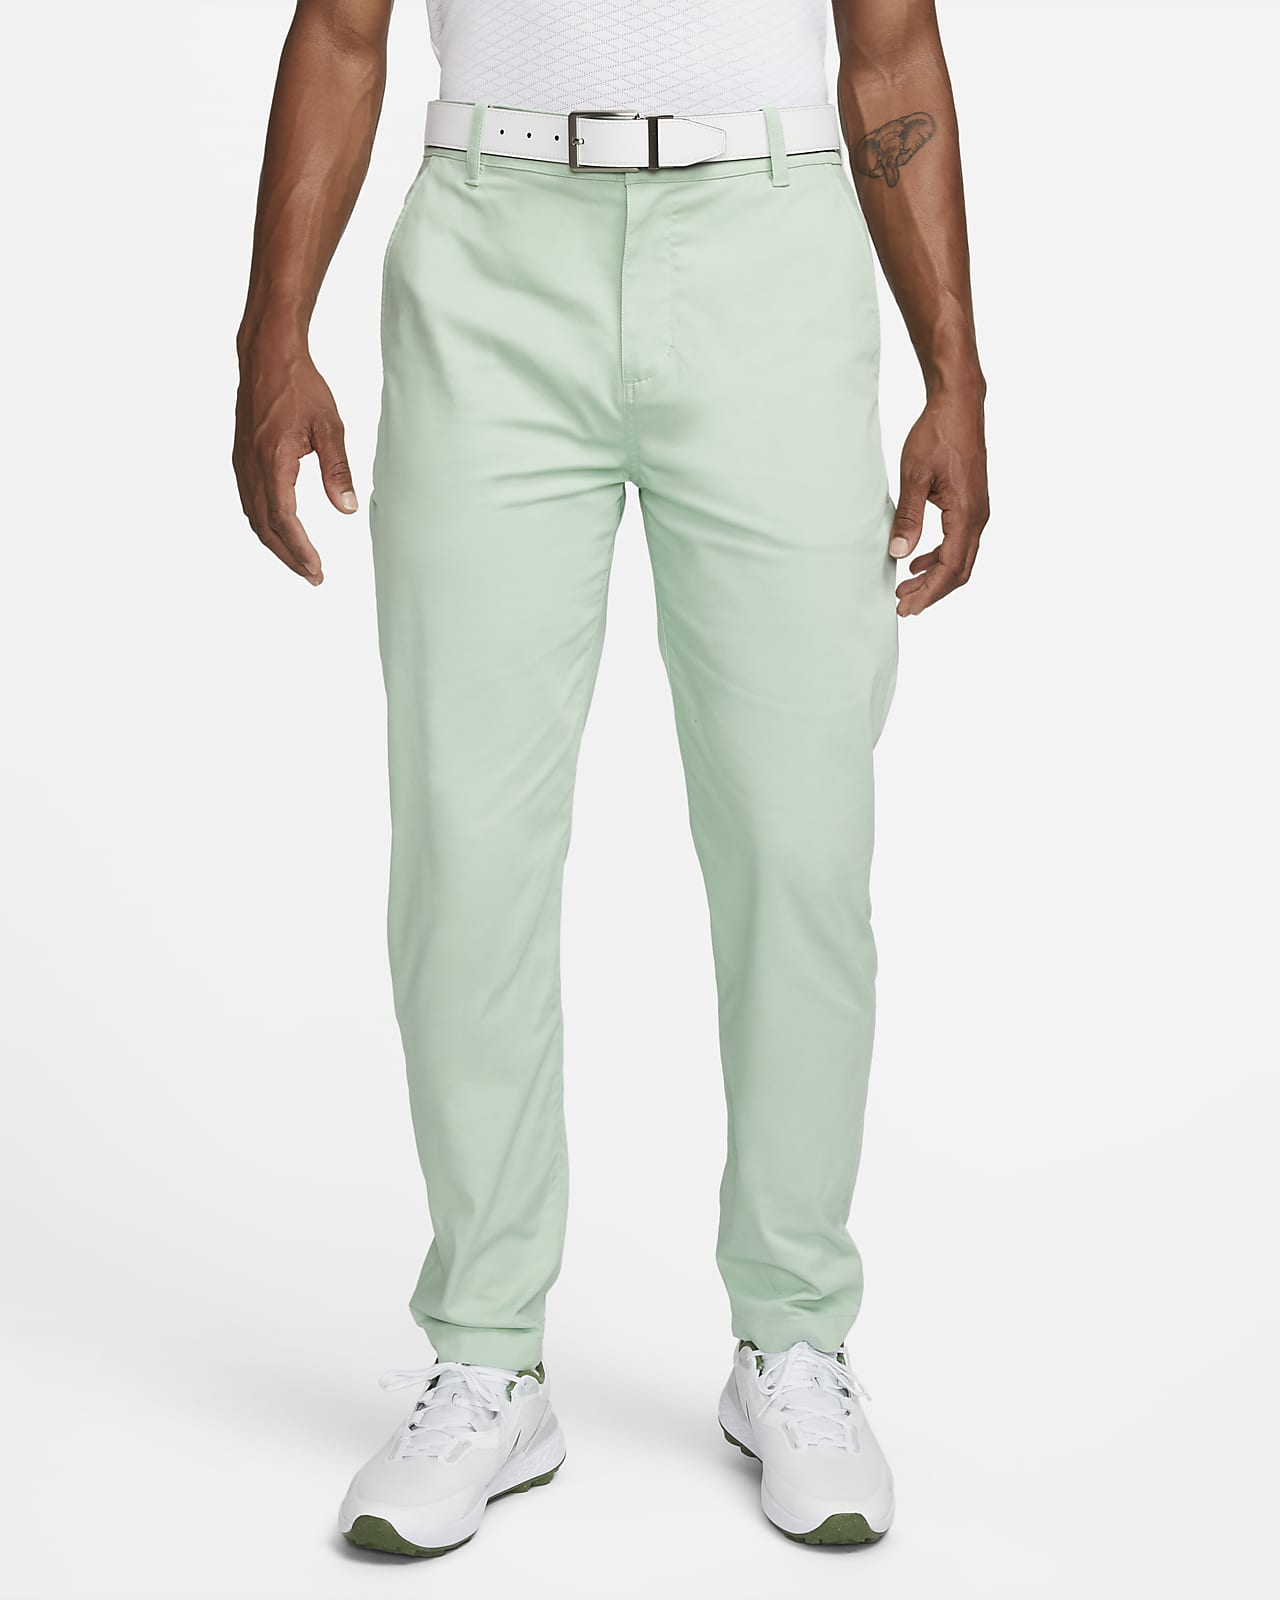 Essentials Men's Straight-Fit Stretch Golf Pant